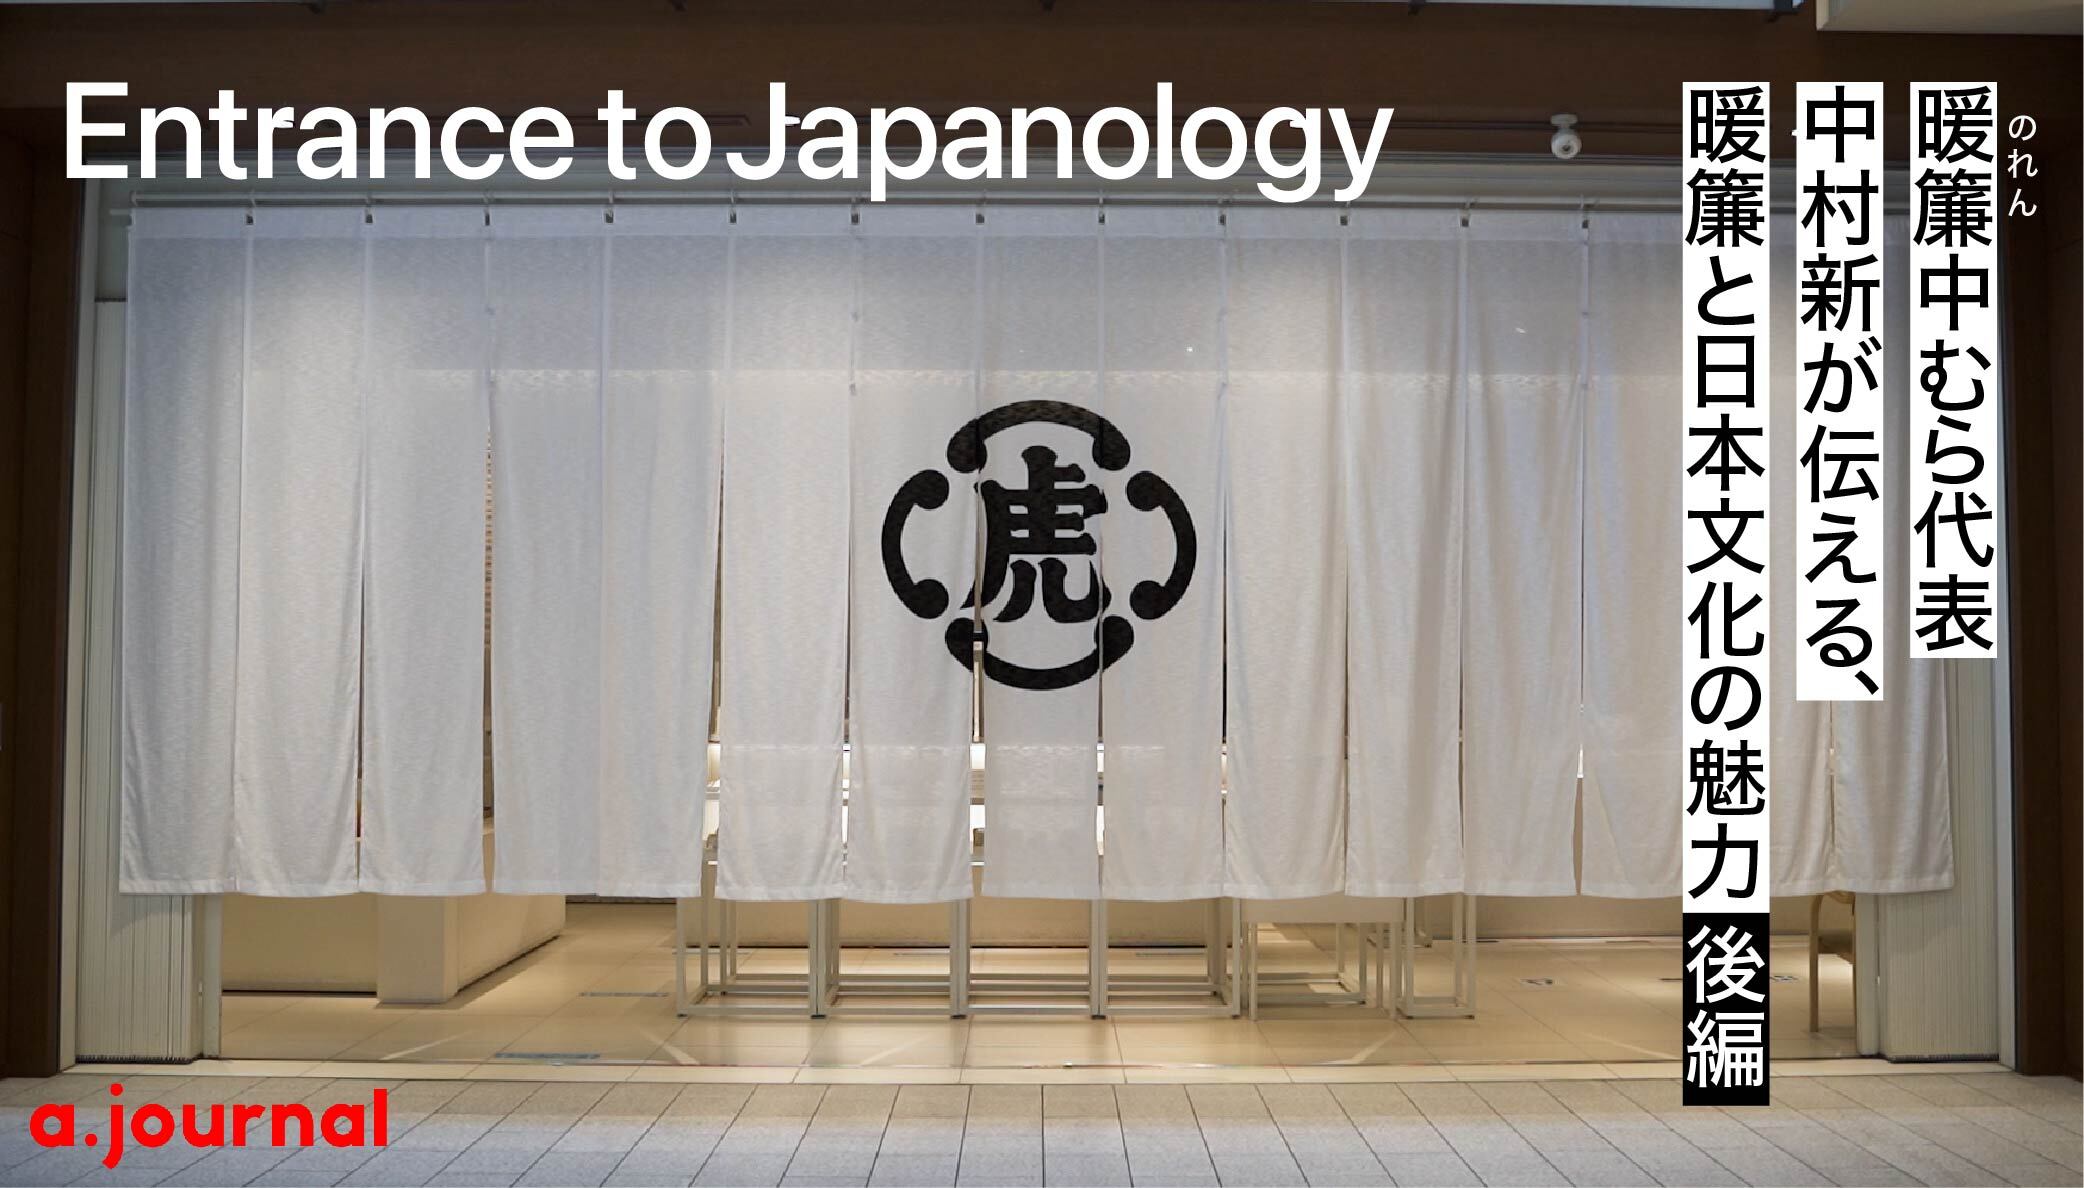 Entrance to Japanology” 暖簾 中むら代表 中村新が伝える、暖簾